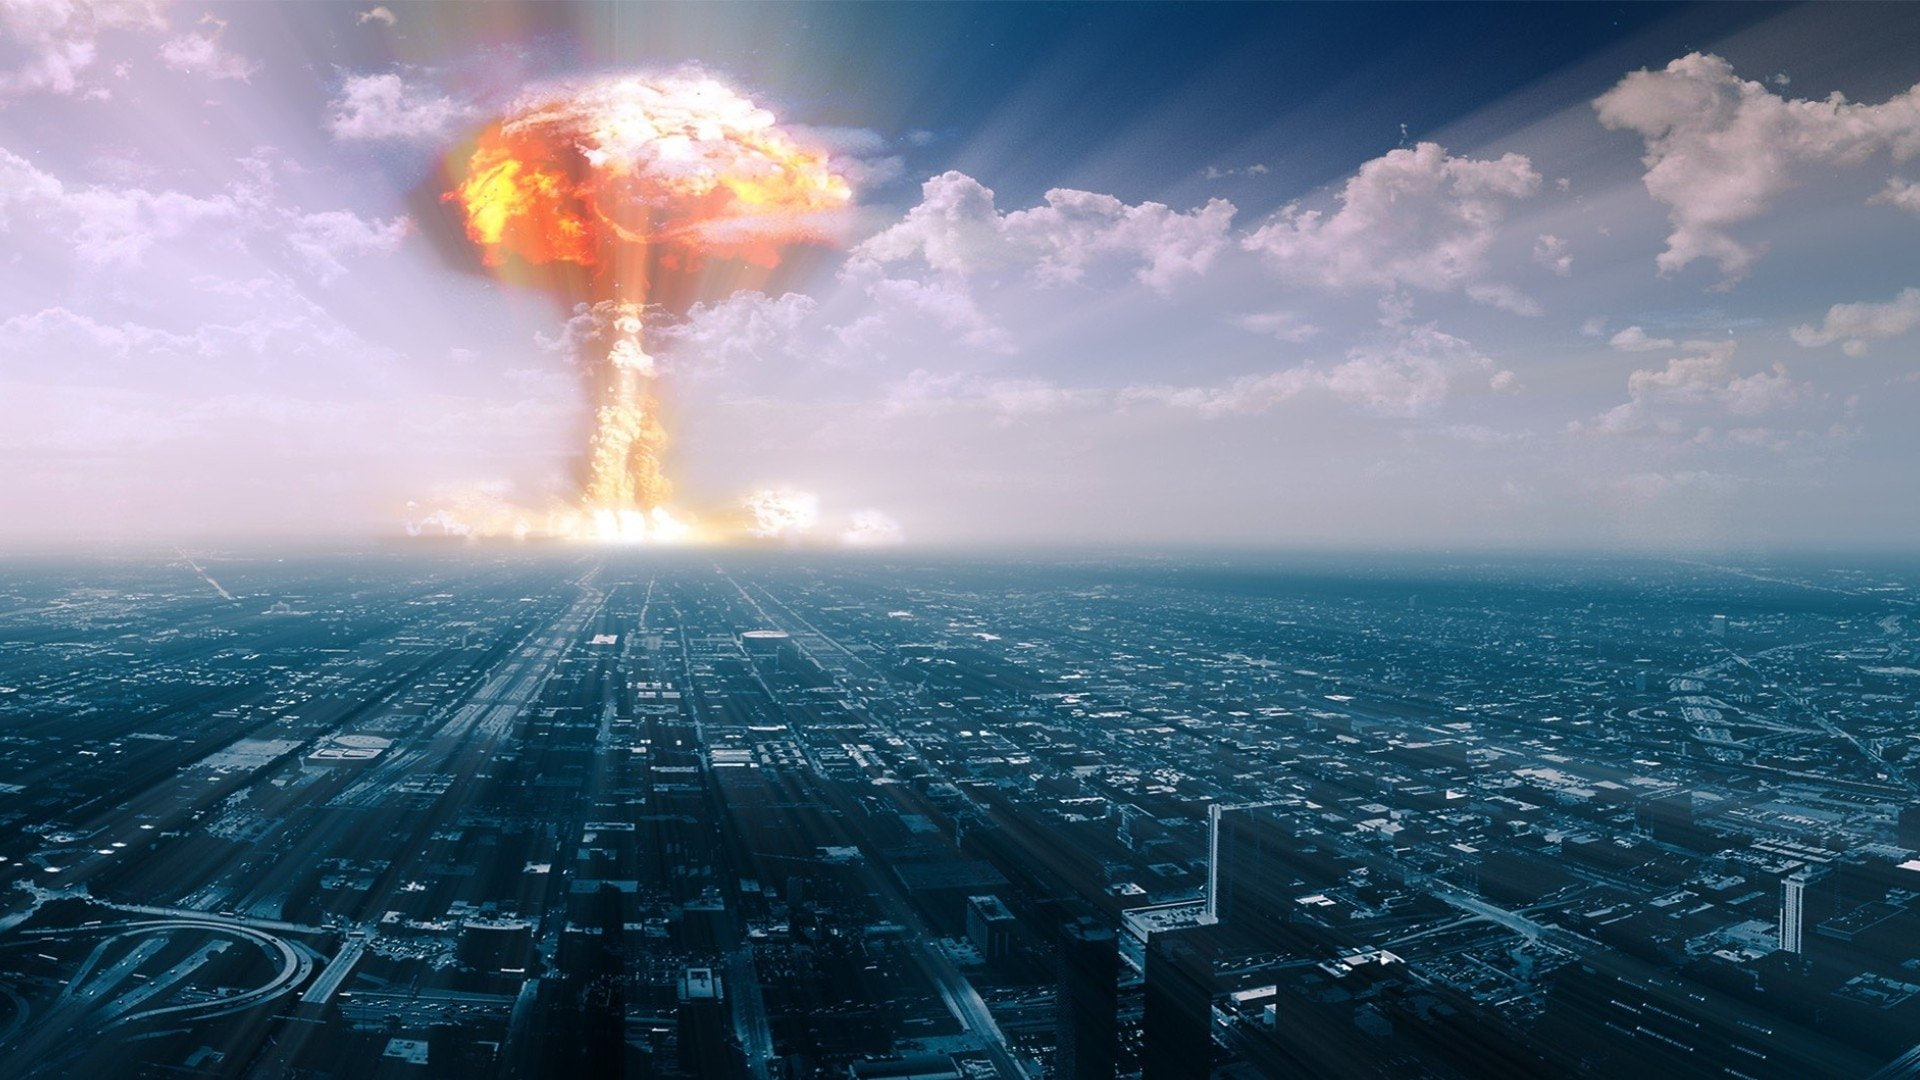 Sci Fi, Apocalyptic, City, Nuclear Explosion, sky, architecture